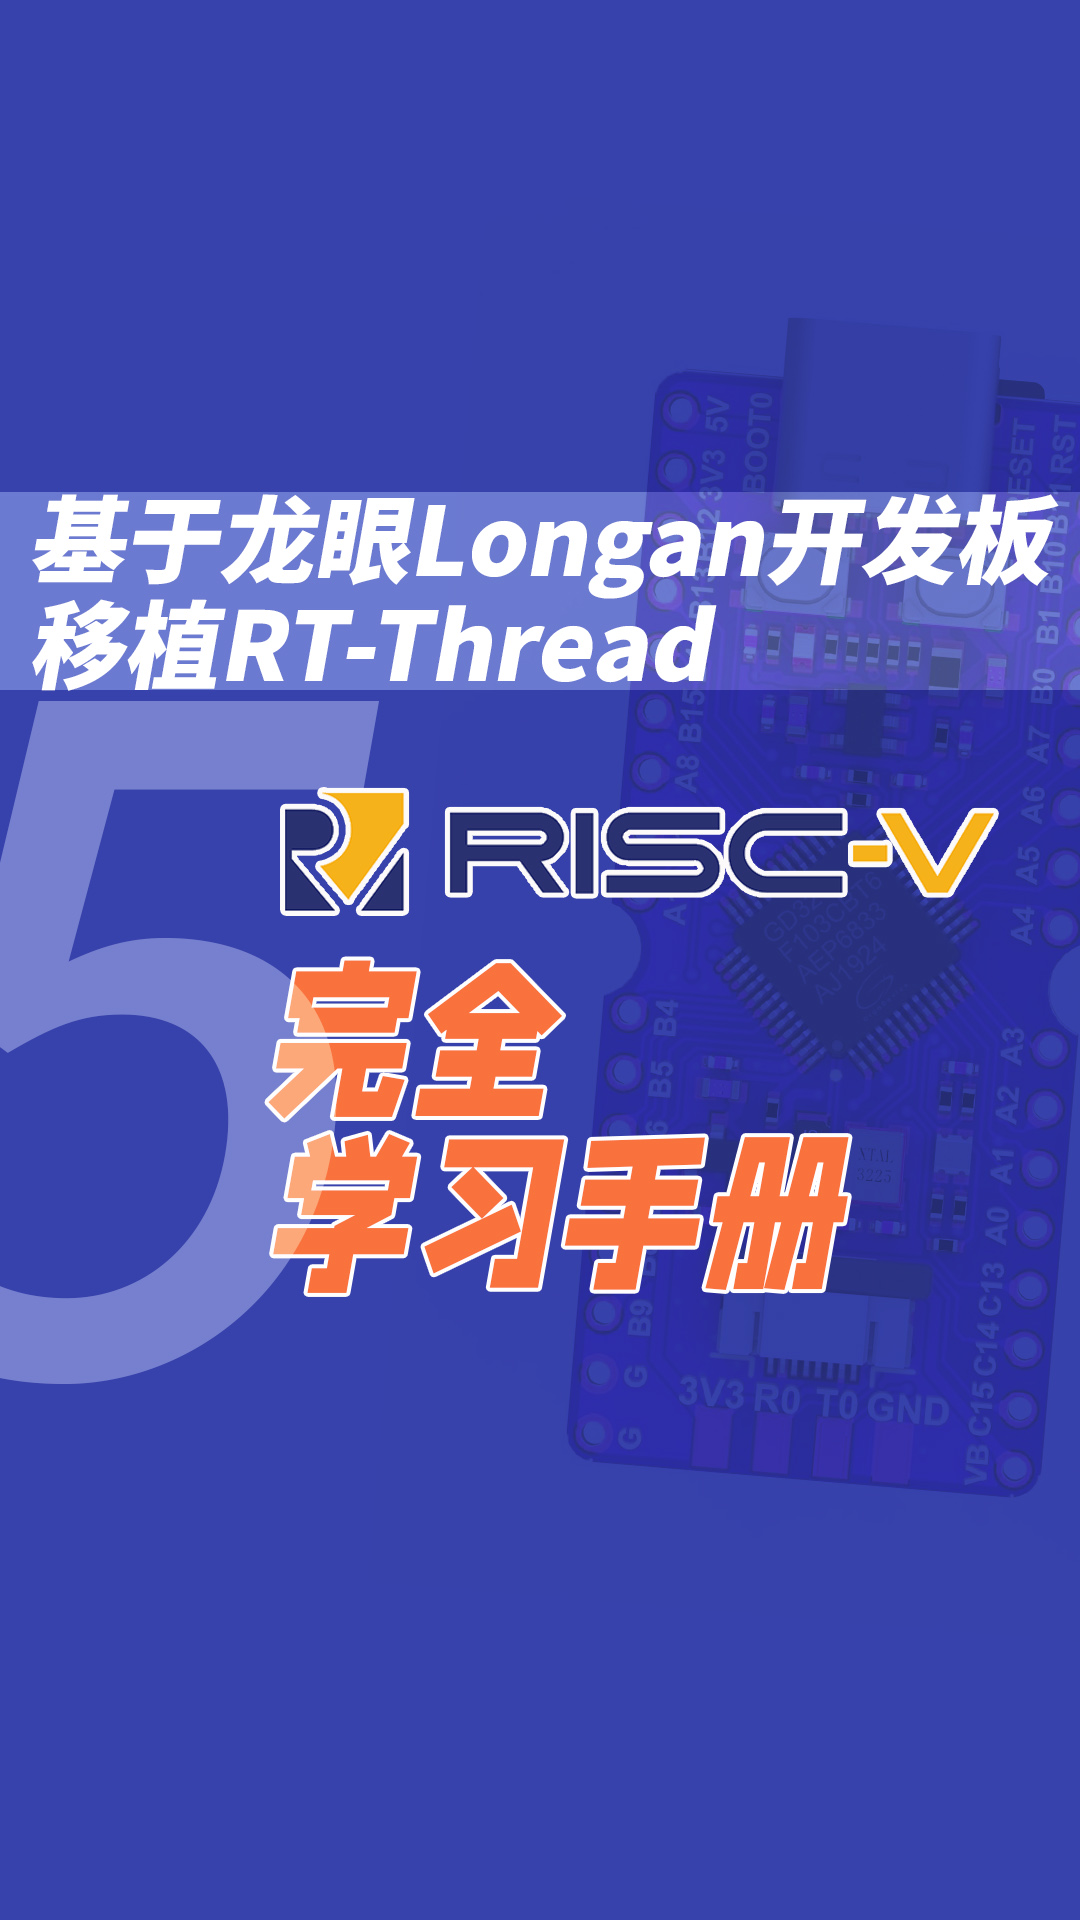 RISC-V完全學習手冊(基于龍眼Longan開發板移植RT-Thread)5